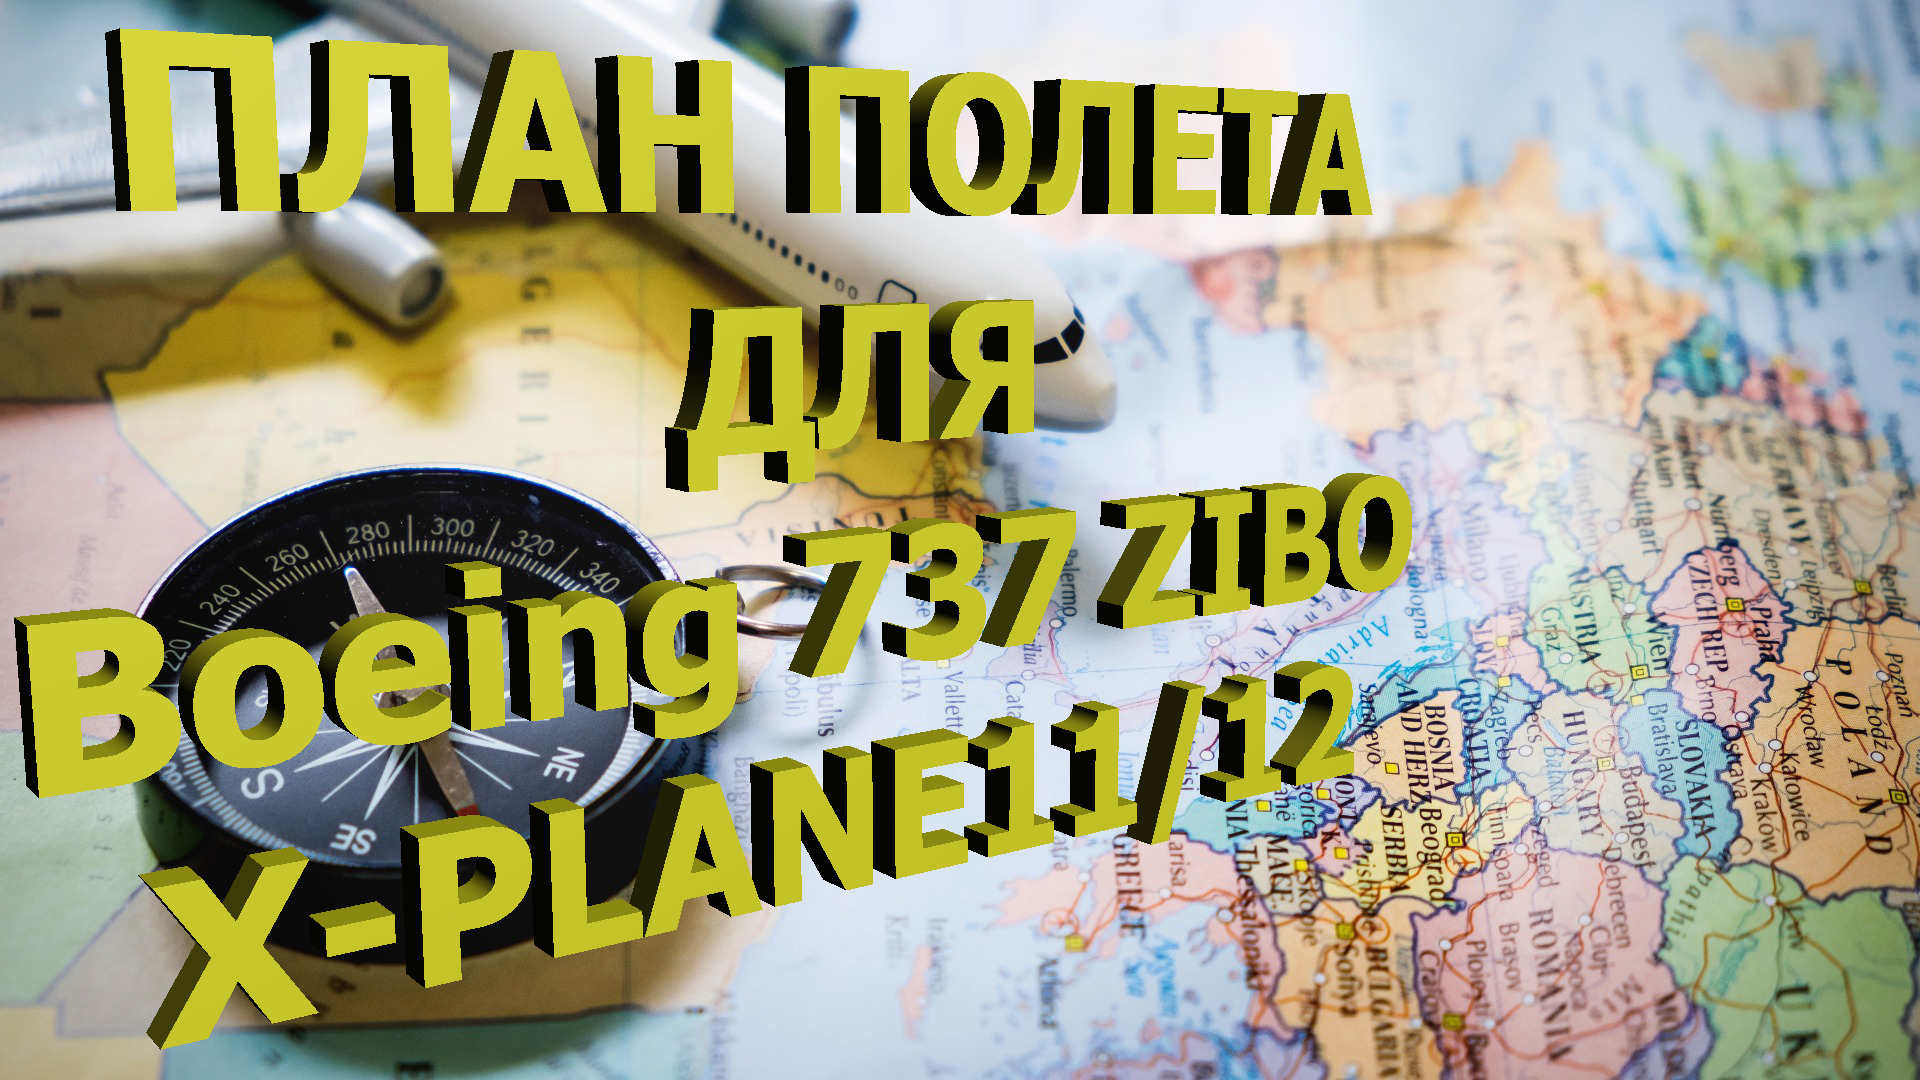 [X-Plane11] План полета для Boeing 737 ZIBO